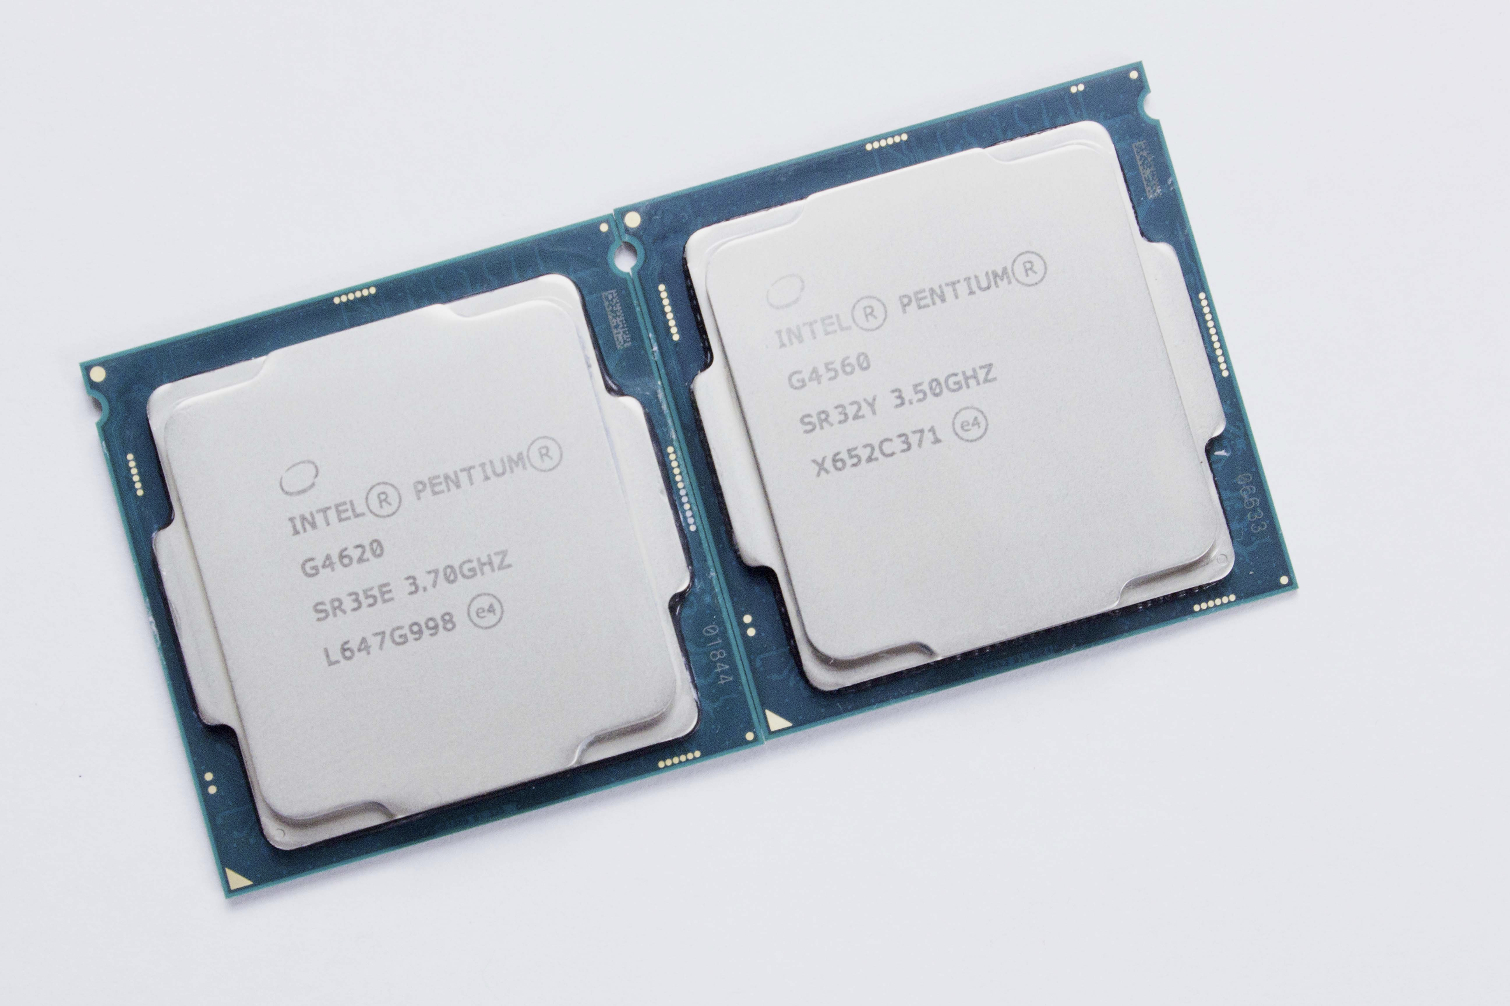 Intel g4620. Процессор Intel Pentium g4620. Пентиум g4560. Intel Pentium 4620. DUALCORE Intel Pentium g4560.